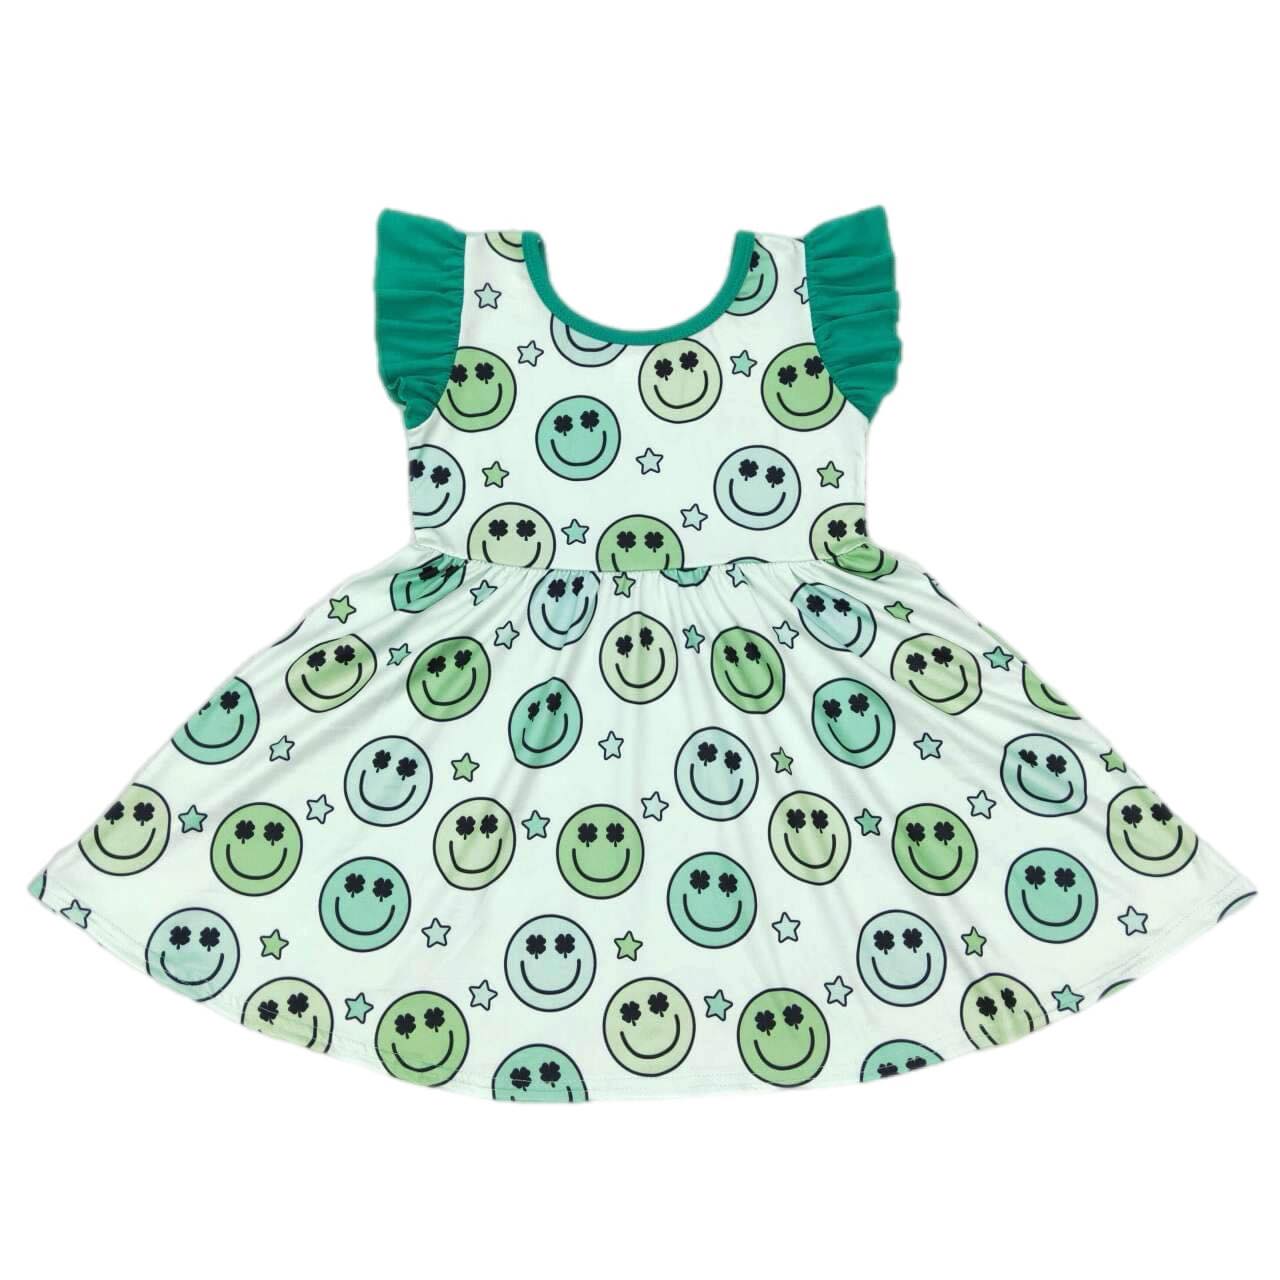 ᴡᴇᴇᴋʟʏ ᴘʀᴇ ᴏʀᴅᴇʀ Green Smilies Dress